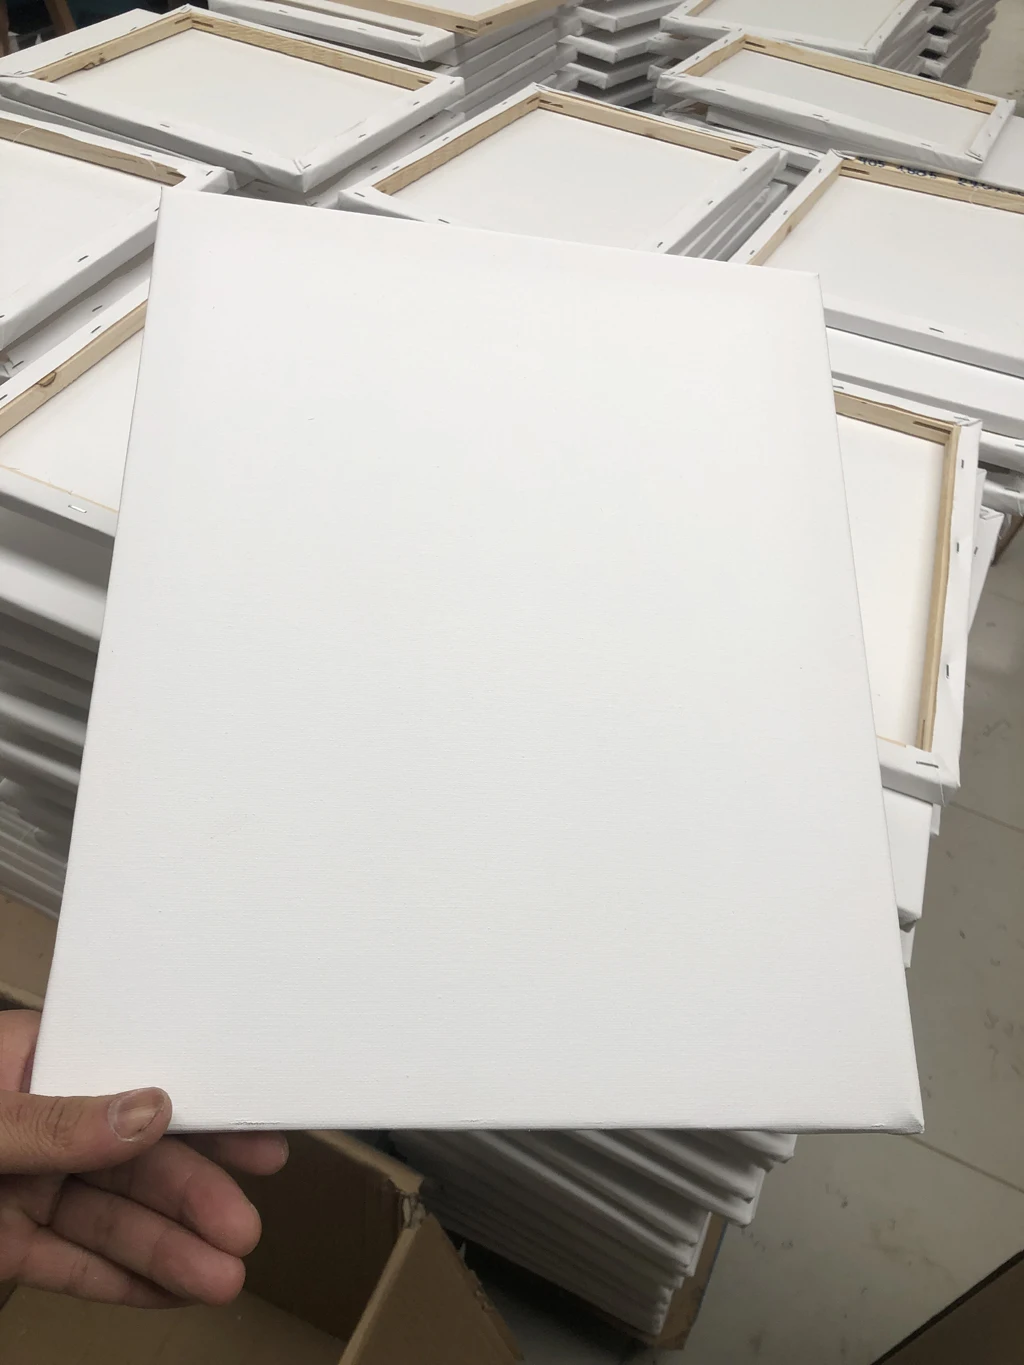 
Hot selling art round shape white cotton canvas panel pad 